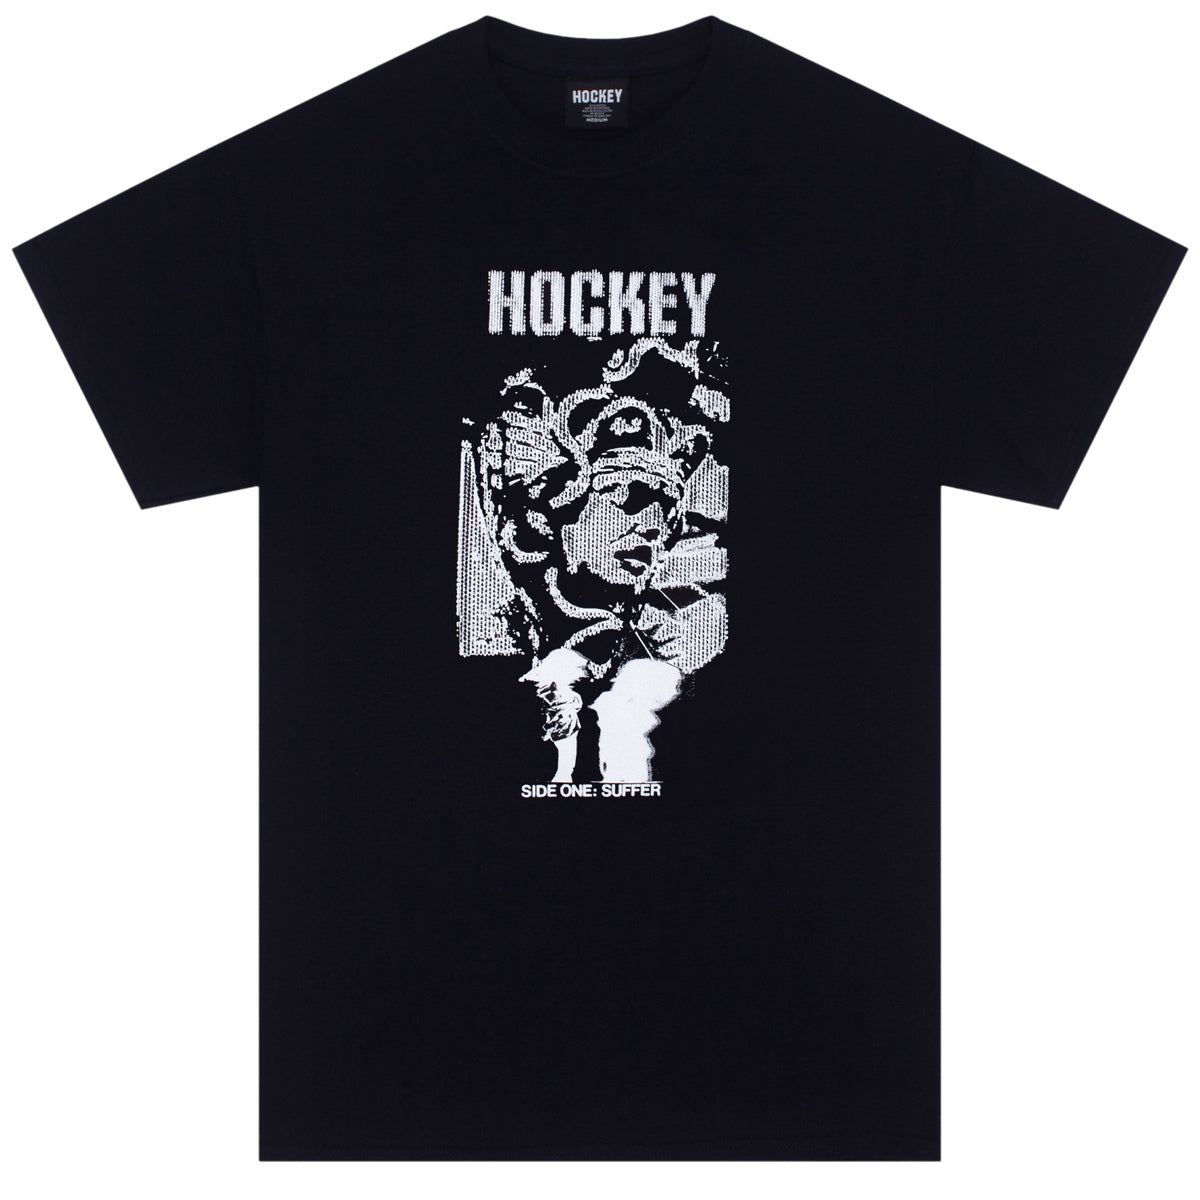 Hockey God of Suffer 2 T-Shirt - Black image 1